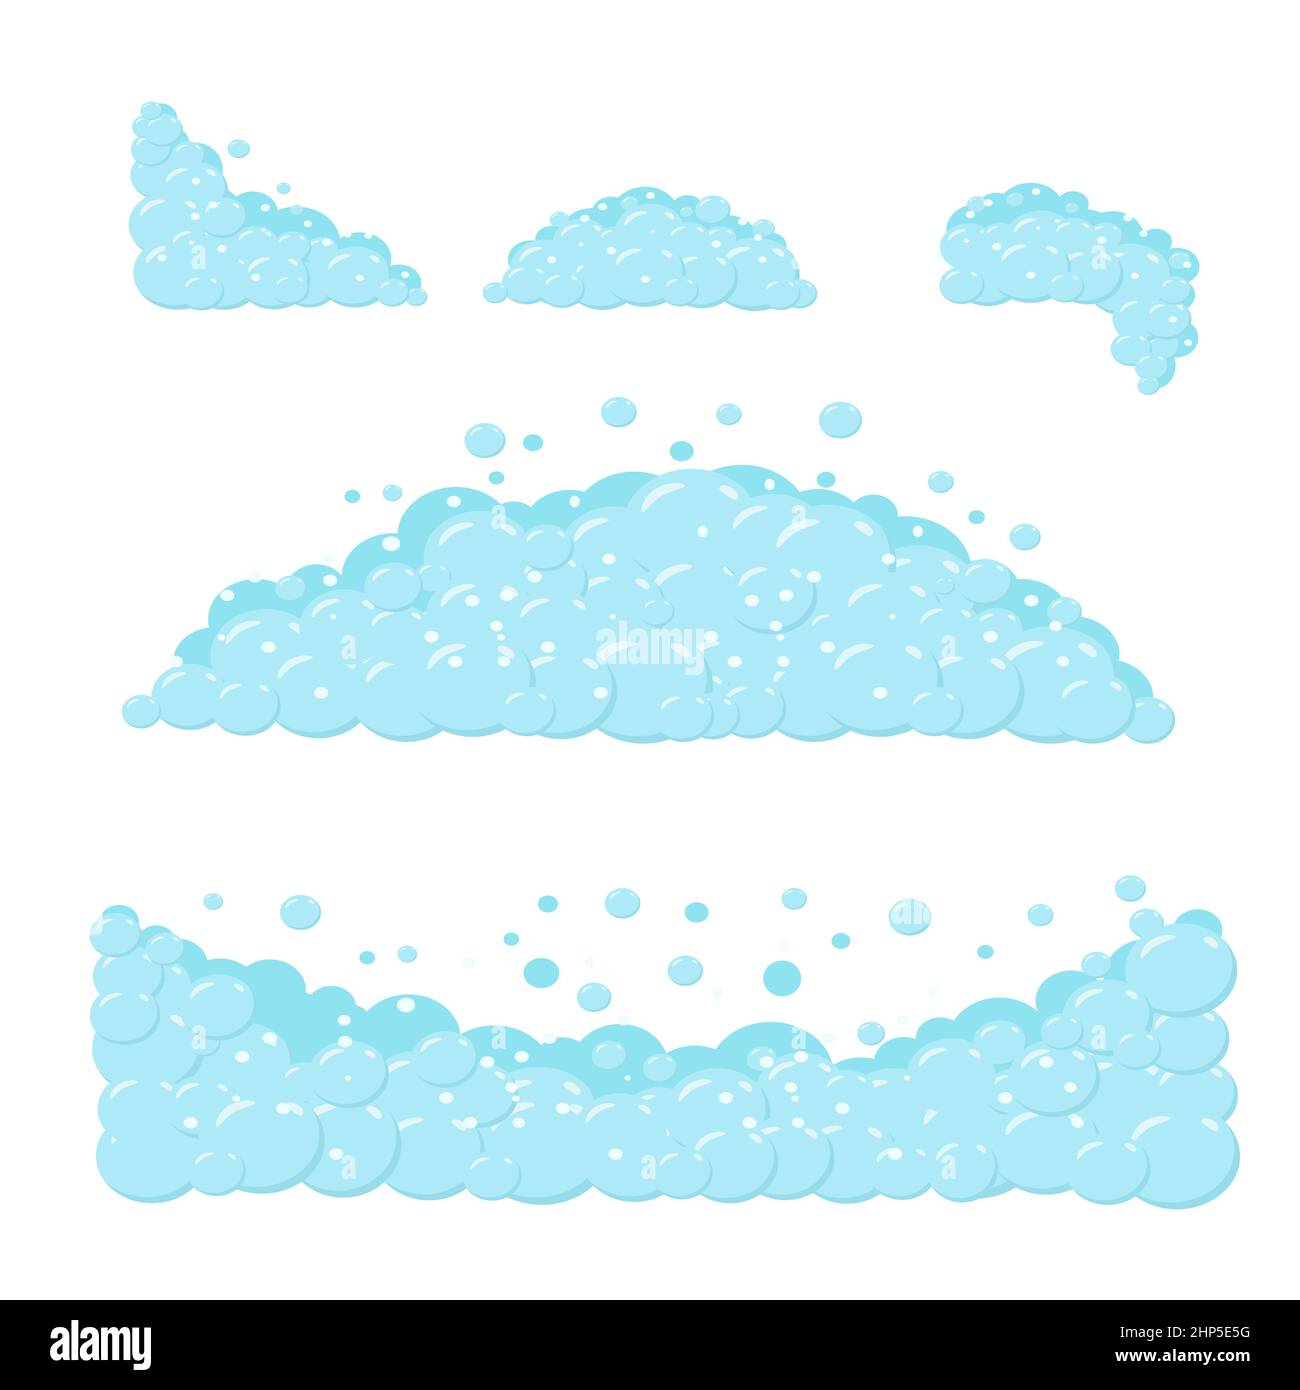 Elementi di schiuma di sapone cartoon. Illustrazione vettoriale di un frammento di schiuma di sapone di shampoo cartoon in una vasca da bagno su sfondo bianco. Illustrazione Vettoriale